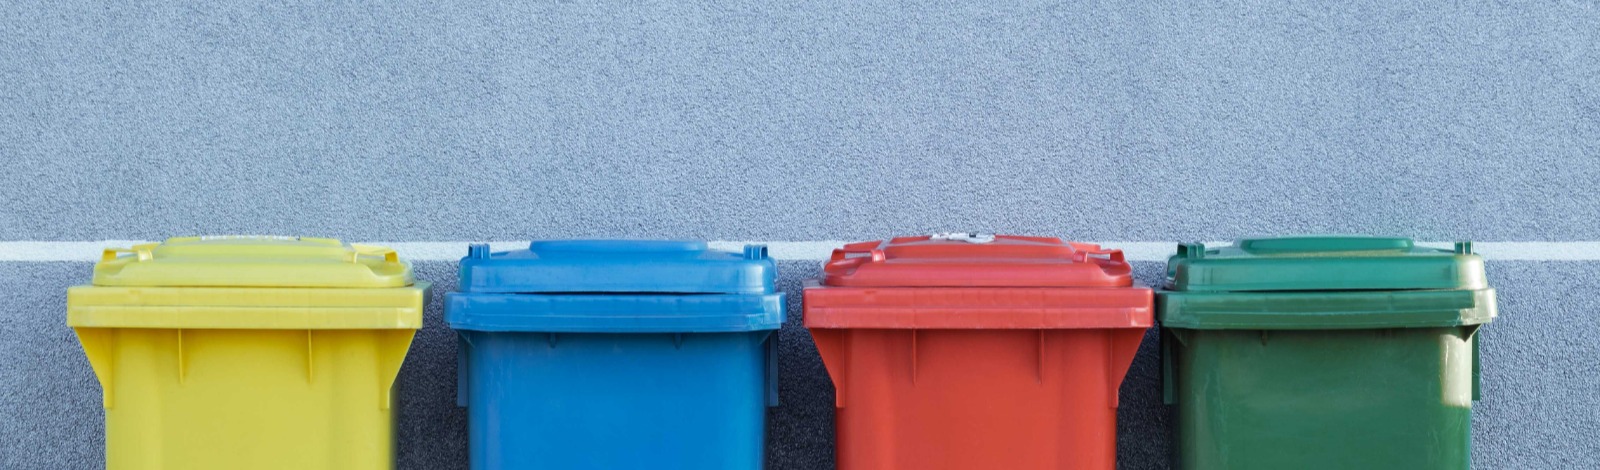 colourful waste bins